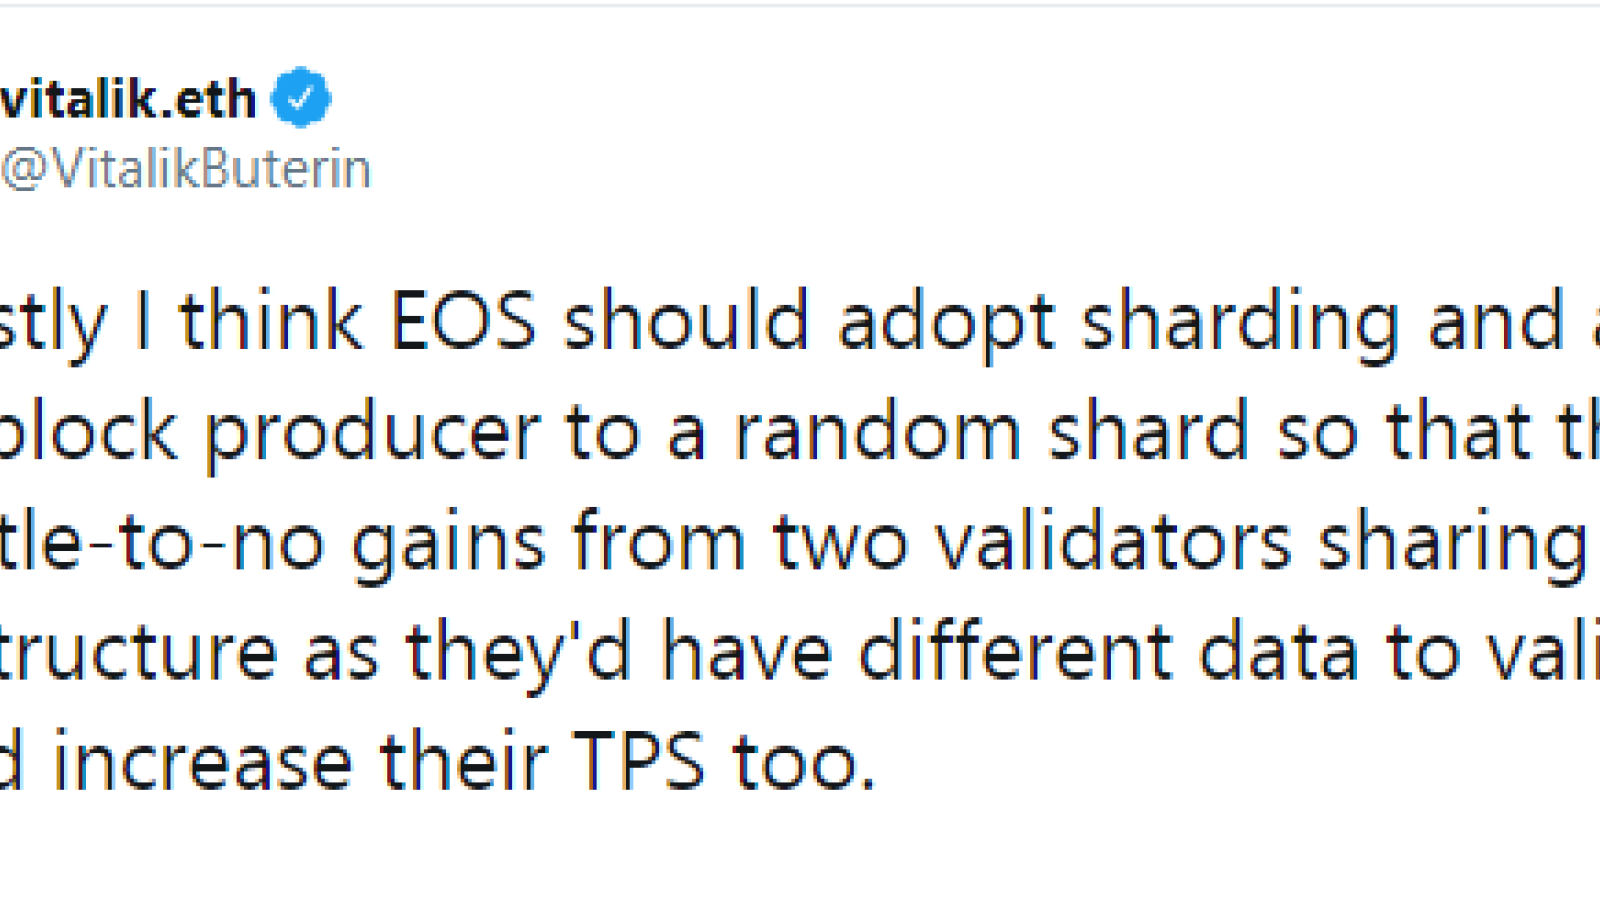 Vitalik Buterin proposes sharding for EOS